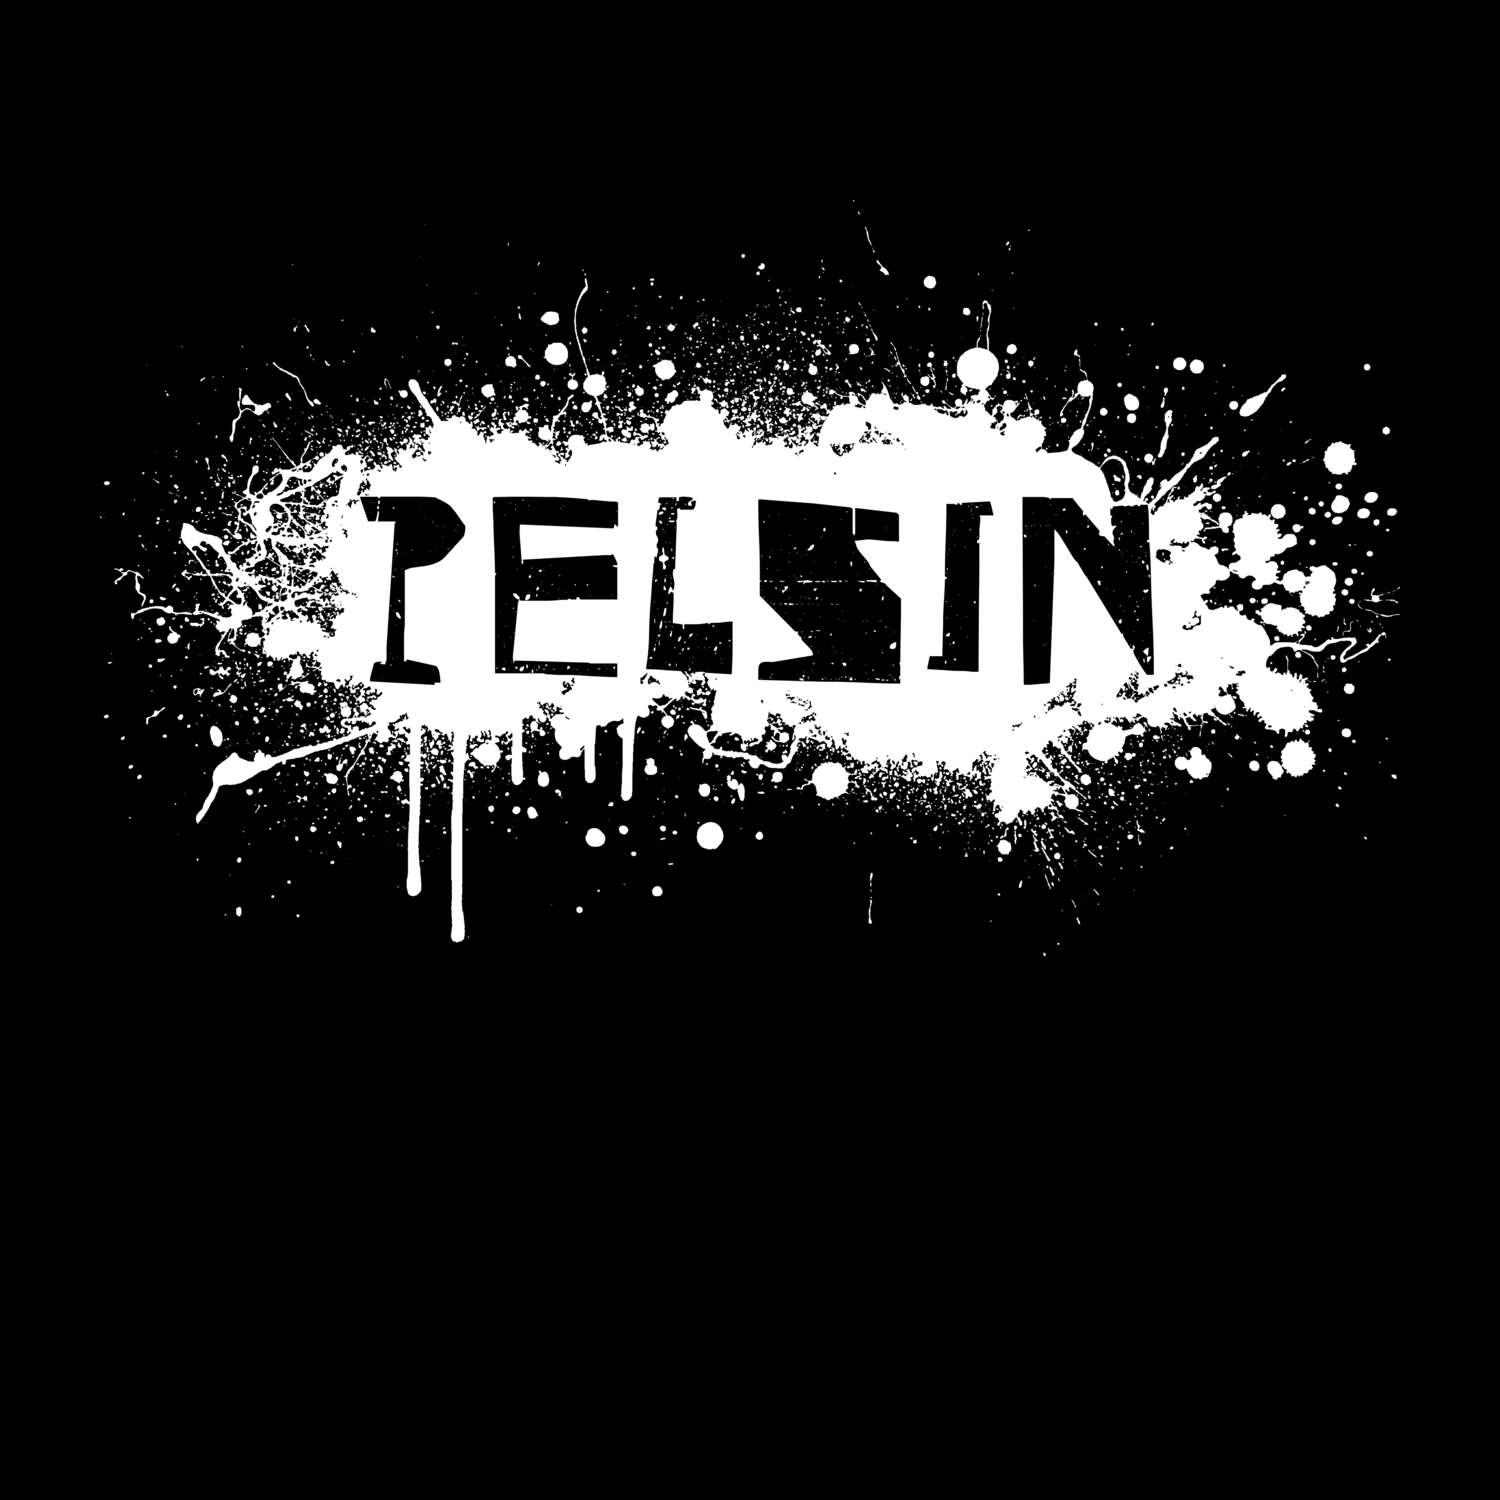 Pelsin T-Shirt »Paint Splash Punk«